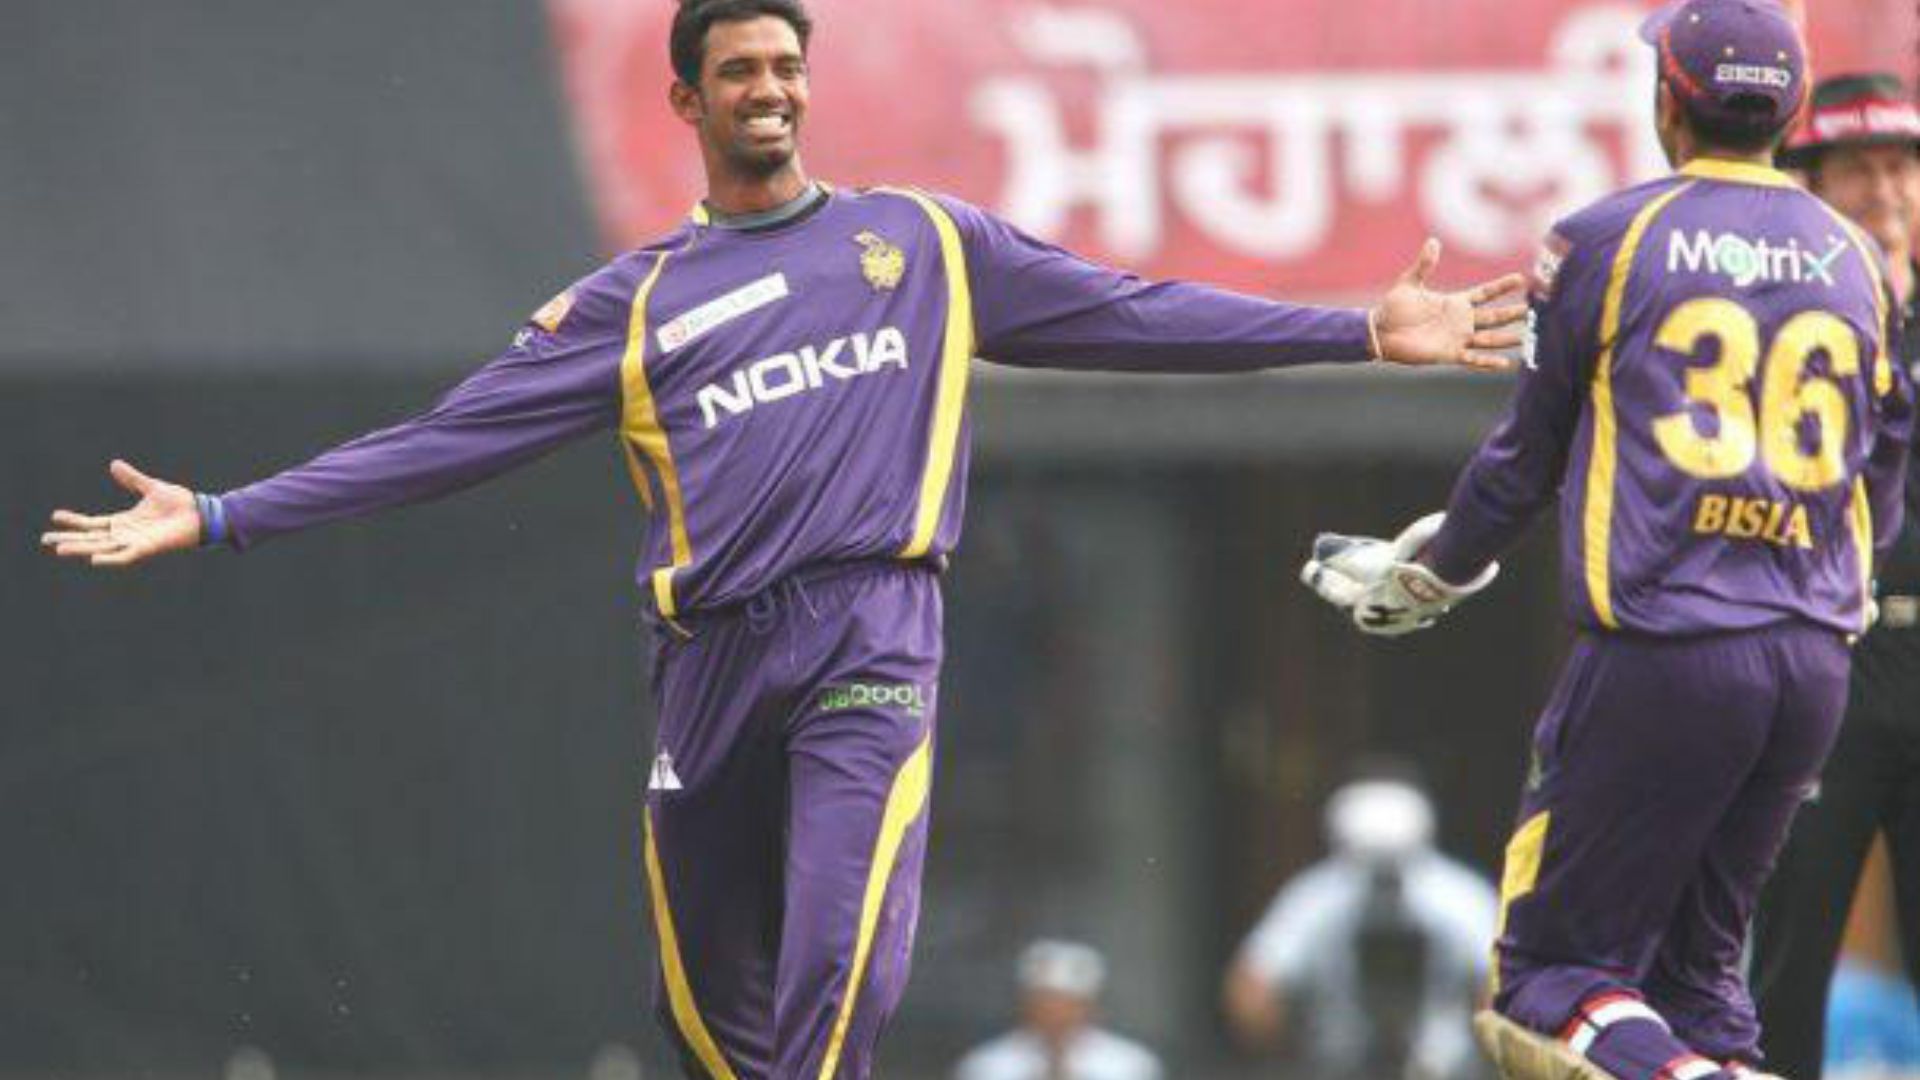 Sachitra Senanayake bagged 9 wickets in 8 matches for KKR.